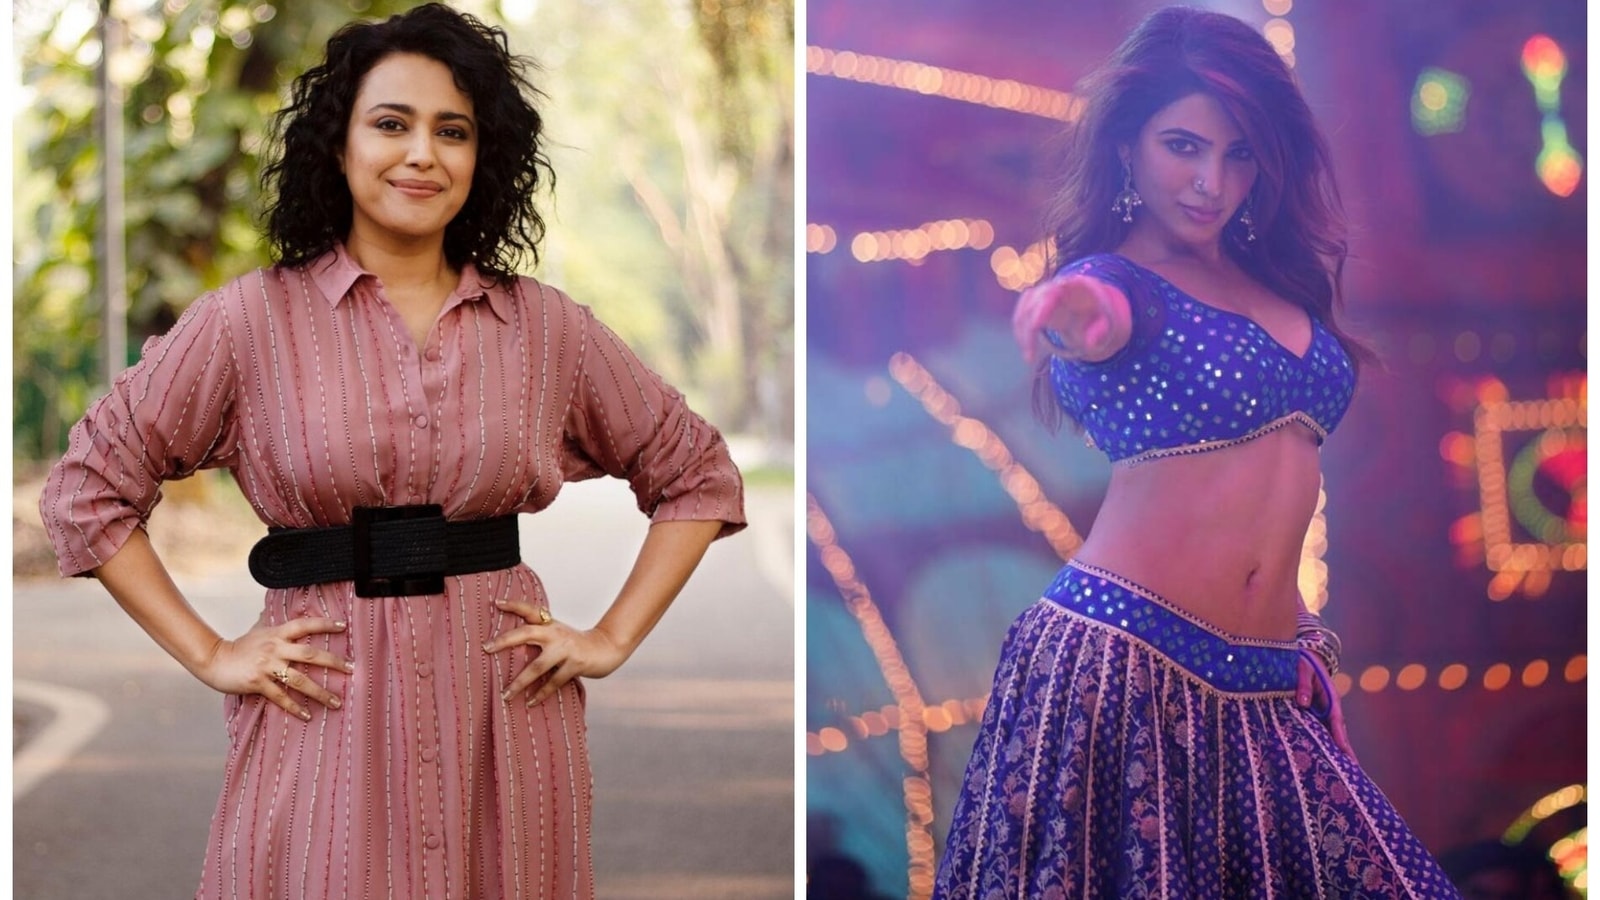 Samantha Ruth Prabhu’s Oo Antava gets love from Swara Bhasker: ‘Loving item number critiquing objectification of women’ - Hindustan Times